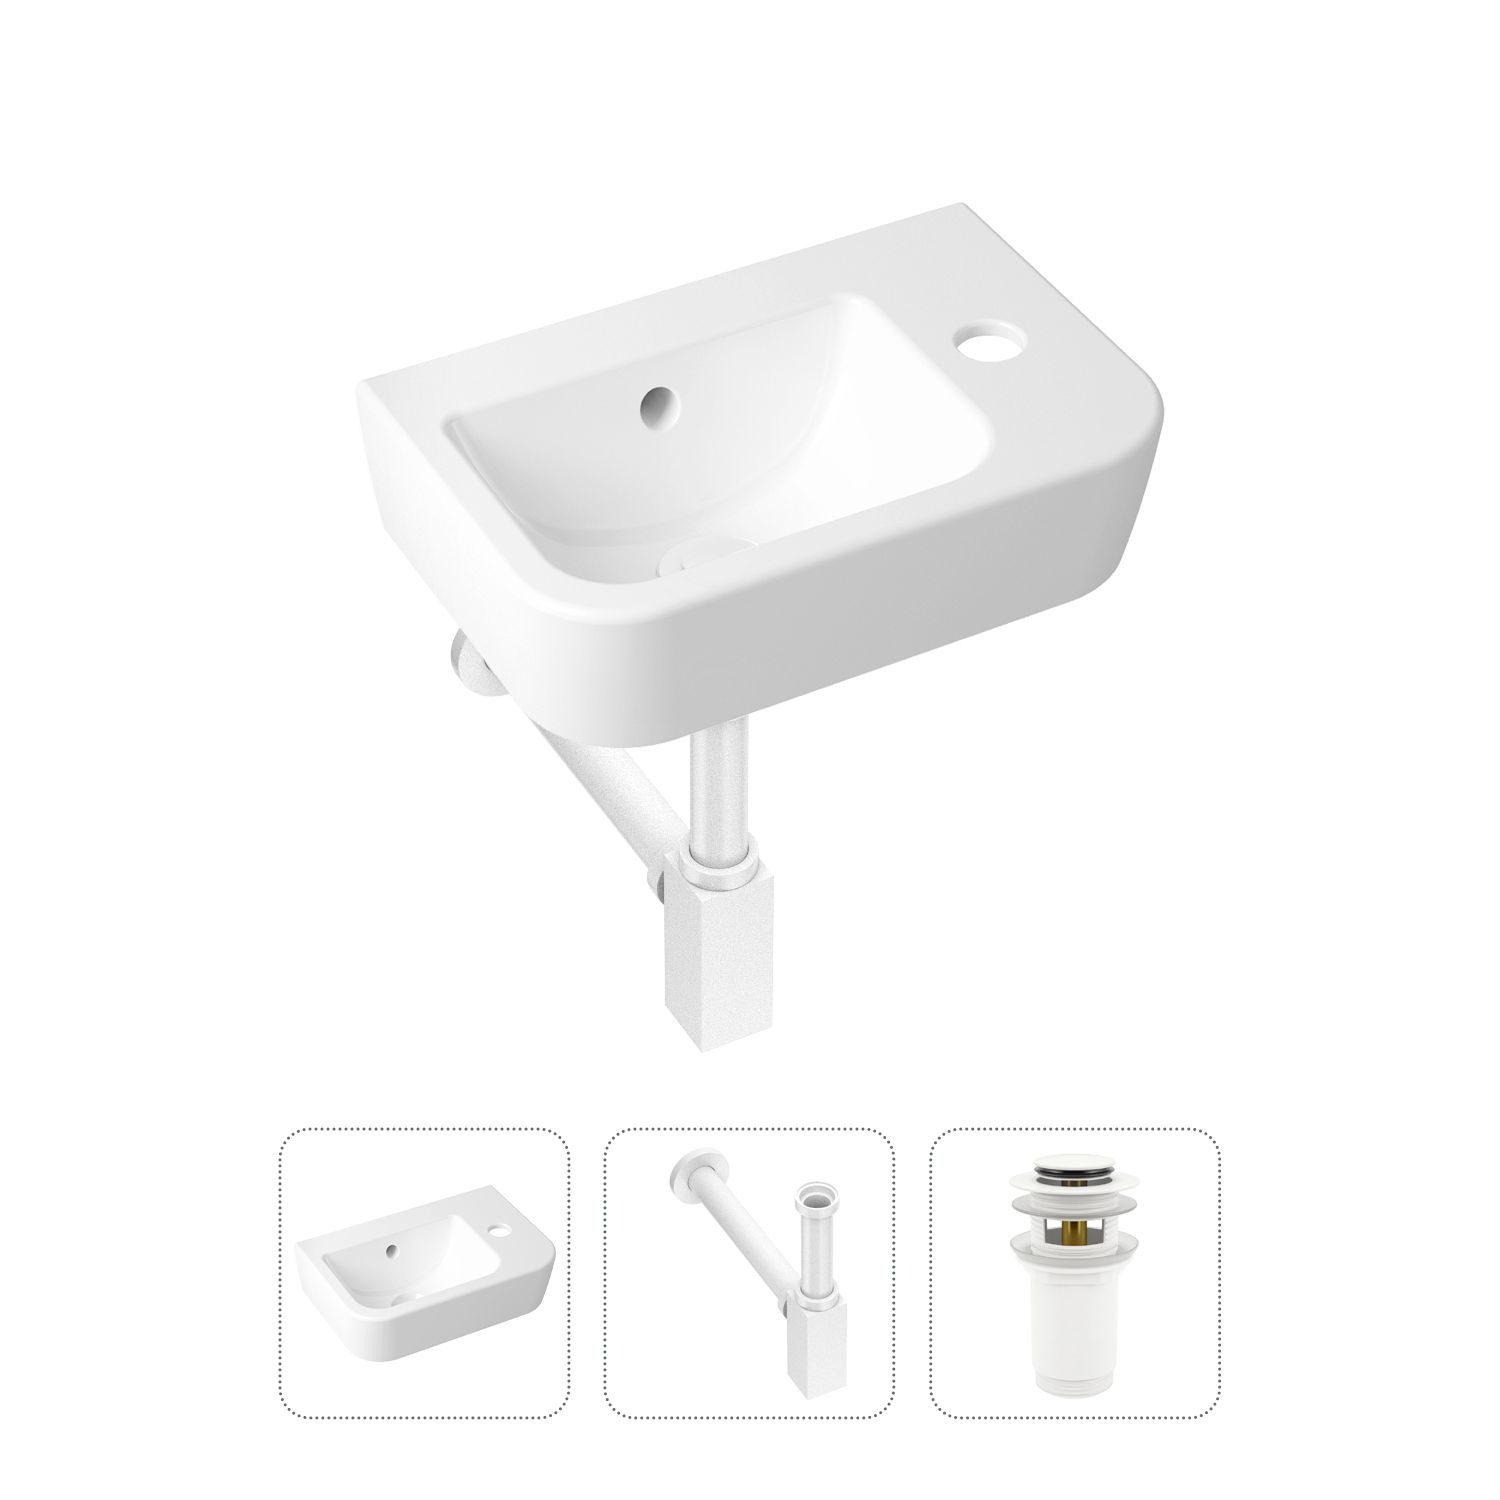 Комплект 3 в 1 Lavinia Boho One 21520766: раковина для туалета 37 см, сифон, донный клапан